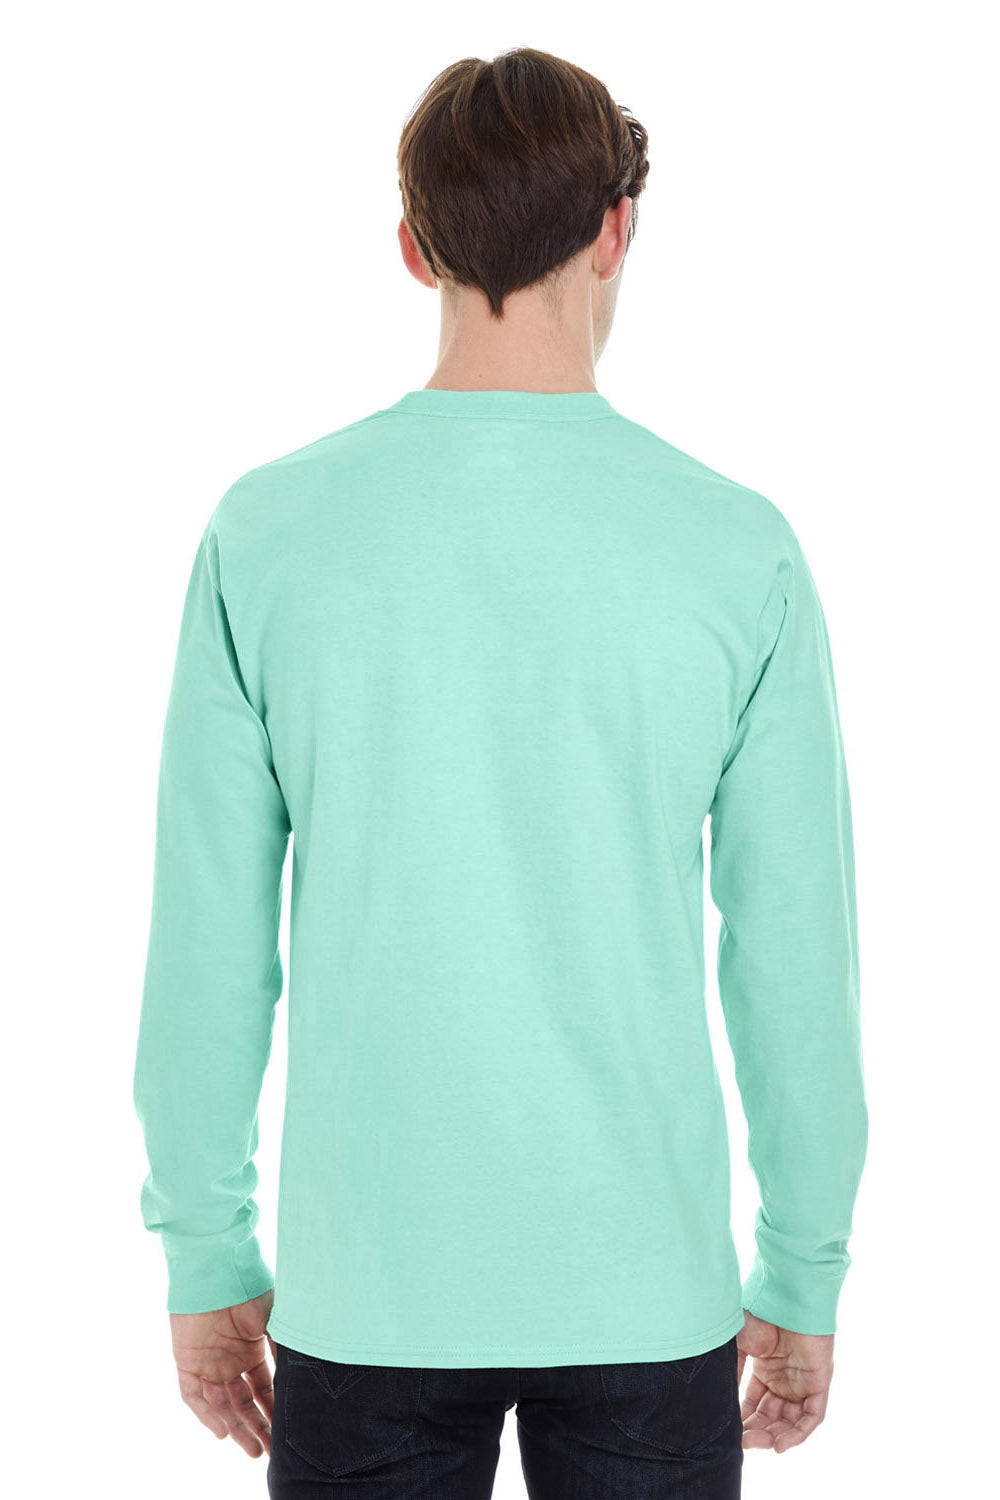 Hanes 5186 Mens Beefy-T Long Sleeve Crewneck T-Shirt Mint Green Back